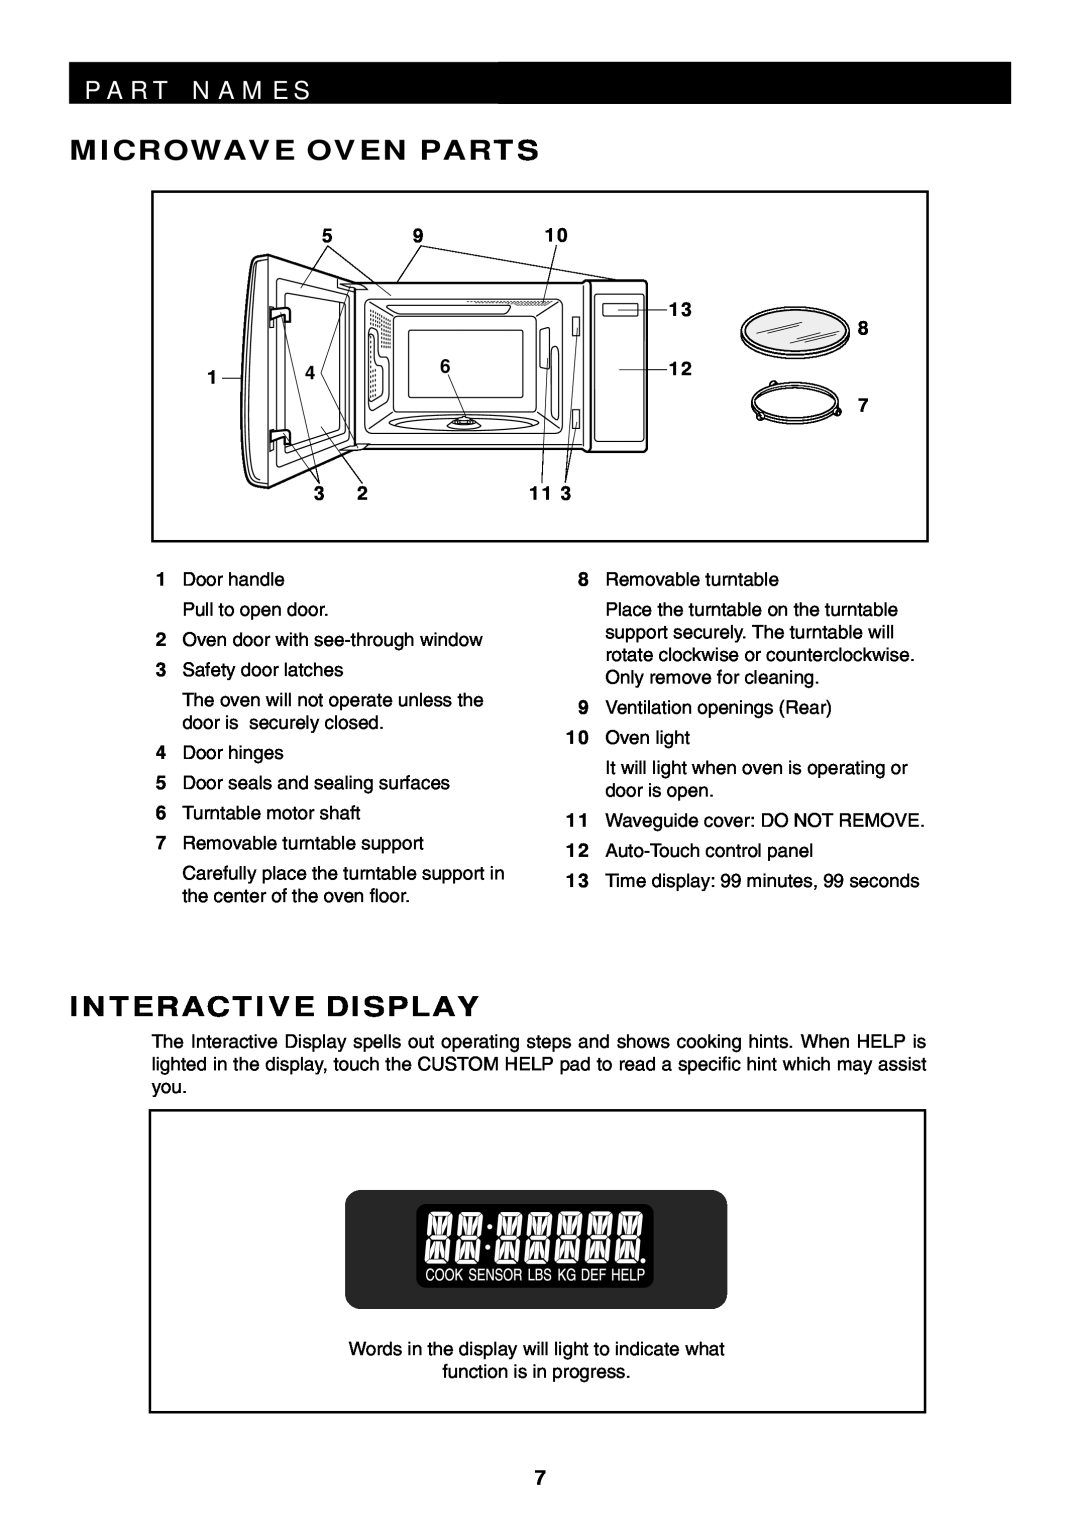 Sharp R-319F manual P A R T N A M E S, Microwave Oven Parts, Interactive Display 